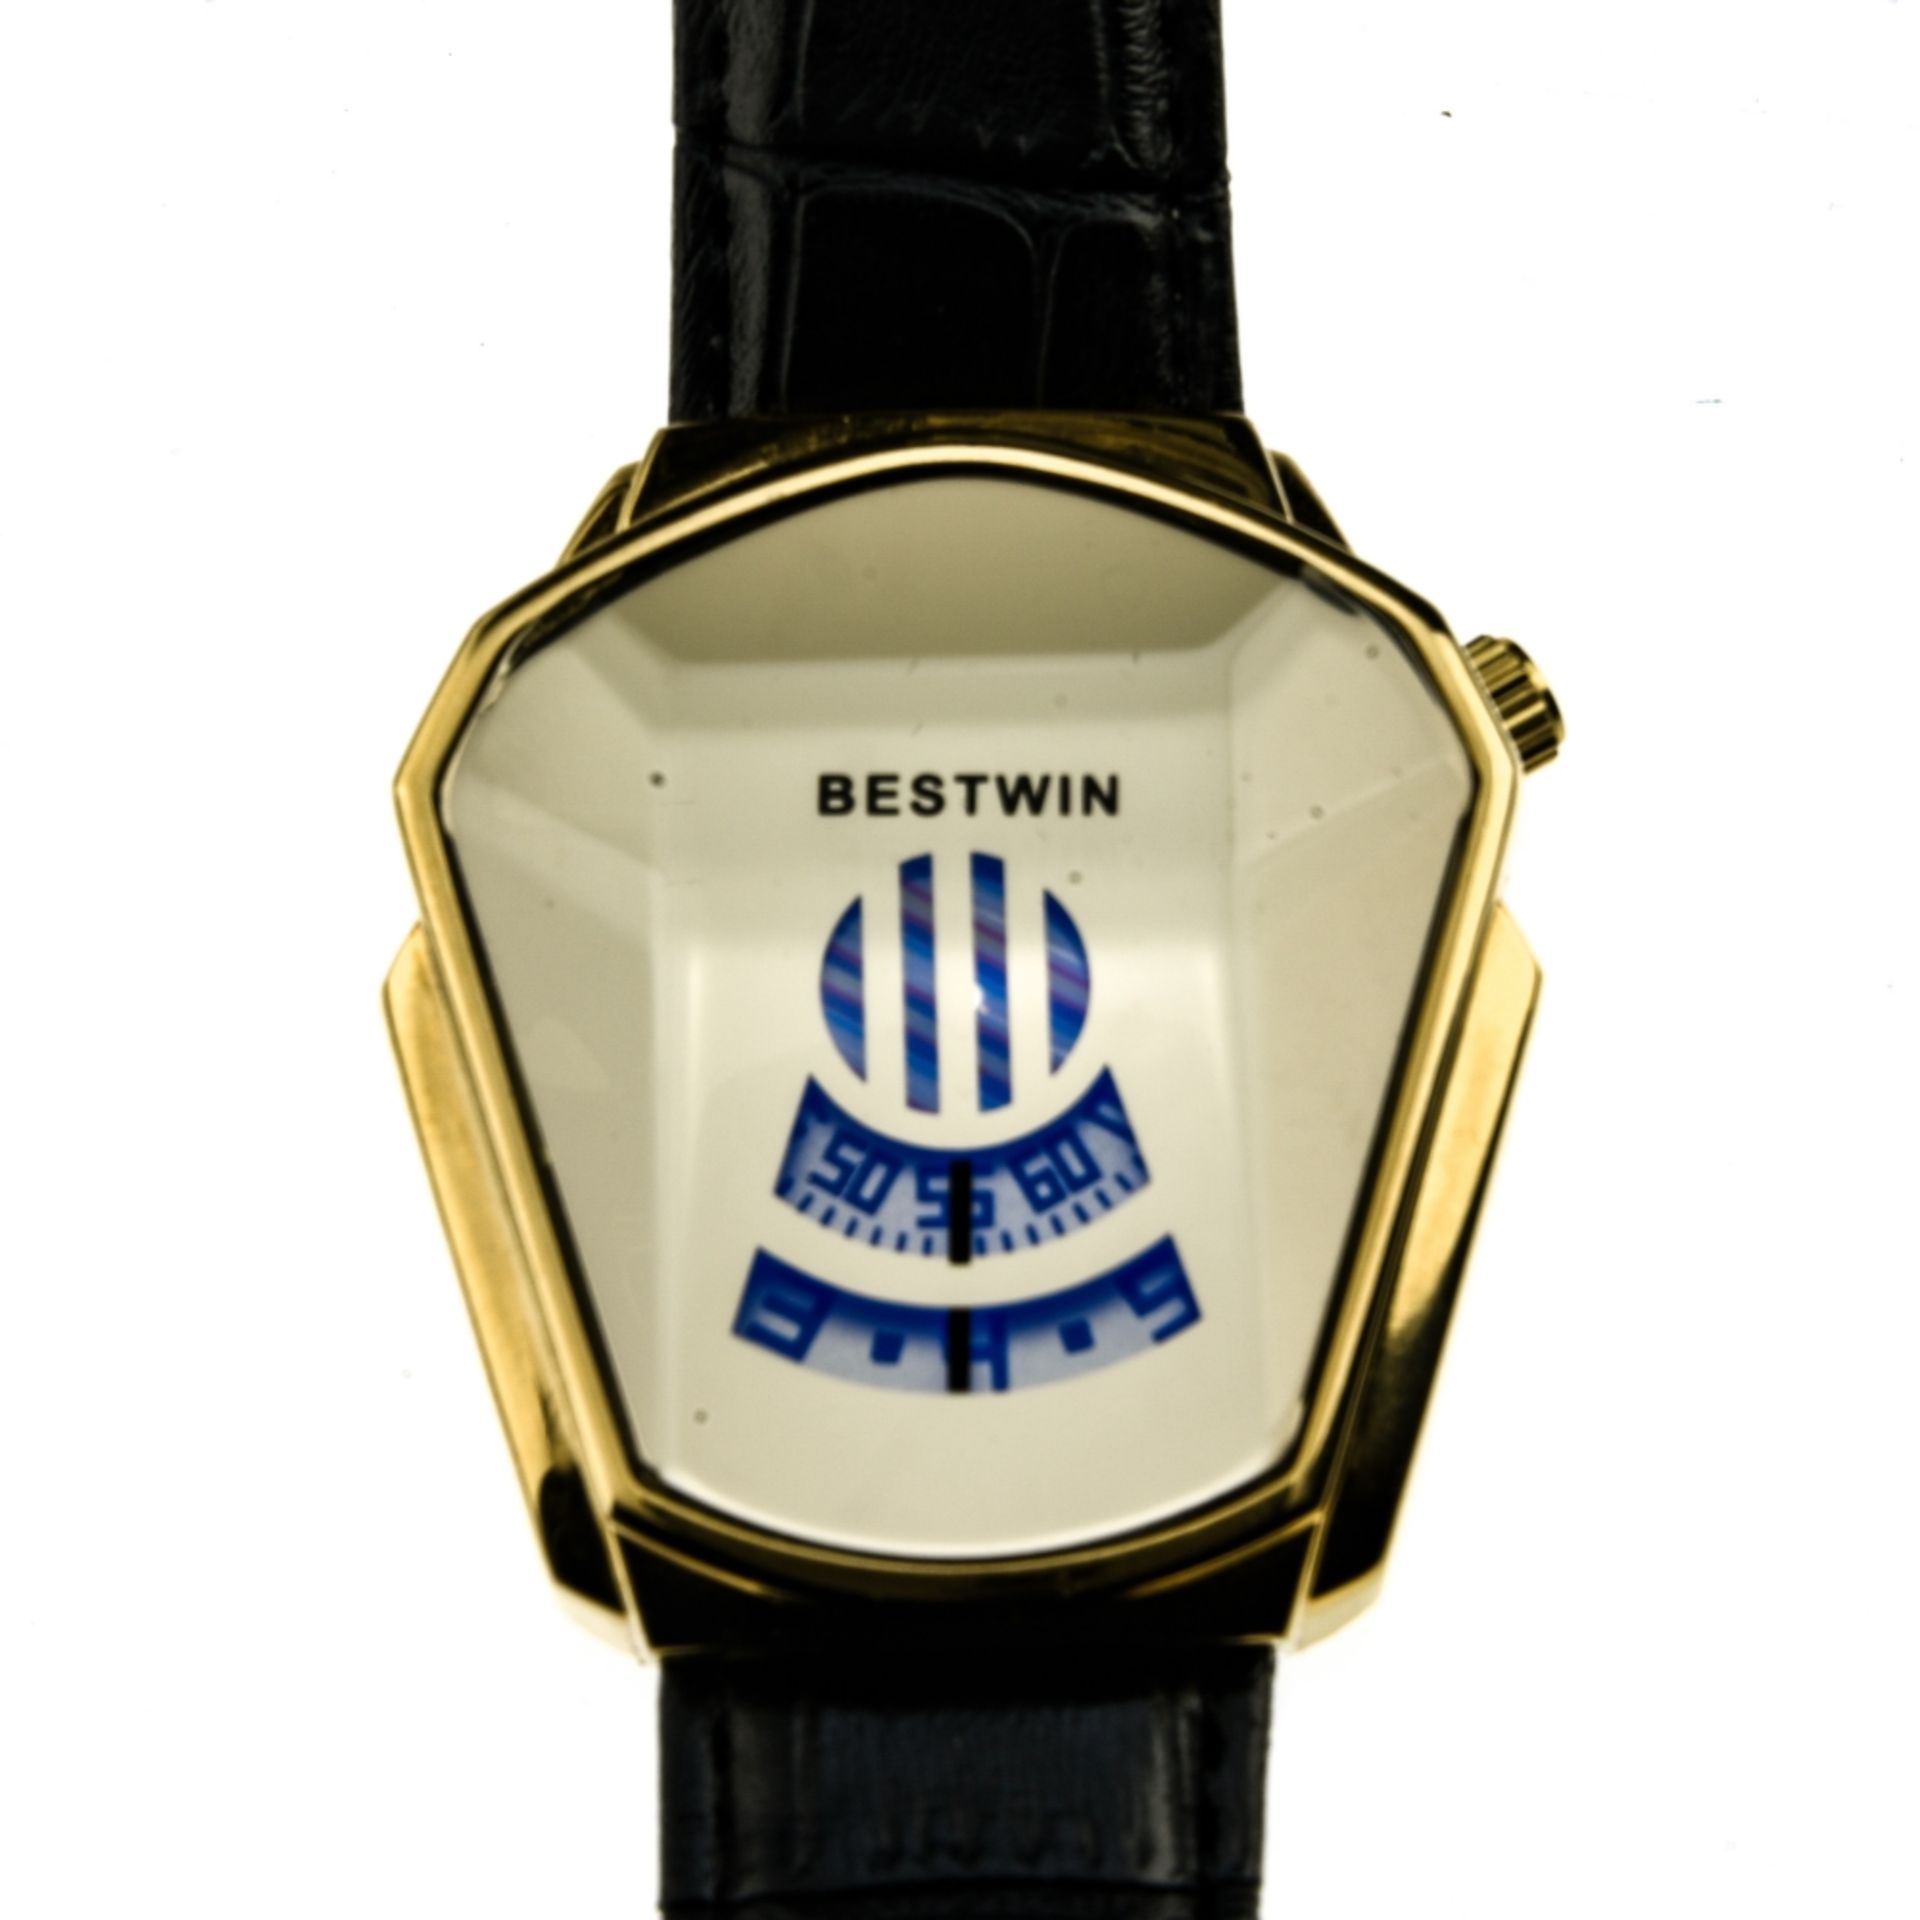 Bestwin Bestwin bracelet watch Bestwin for men Quartz movement with disk display. Diamond-shaped